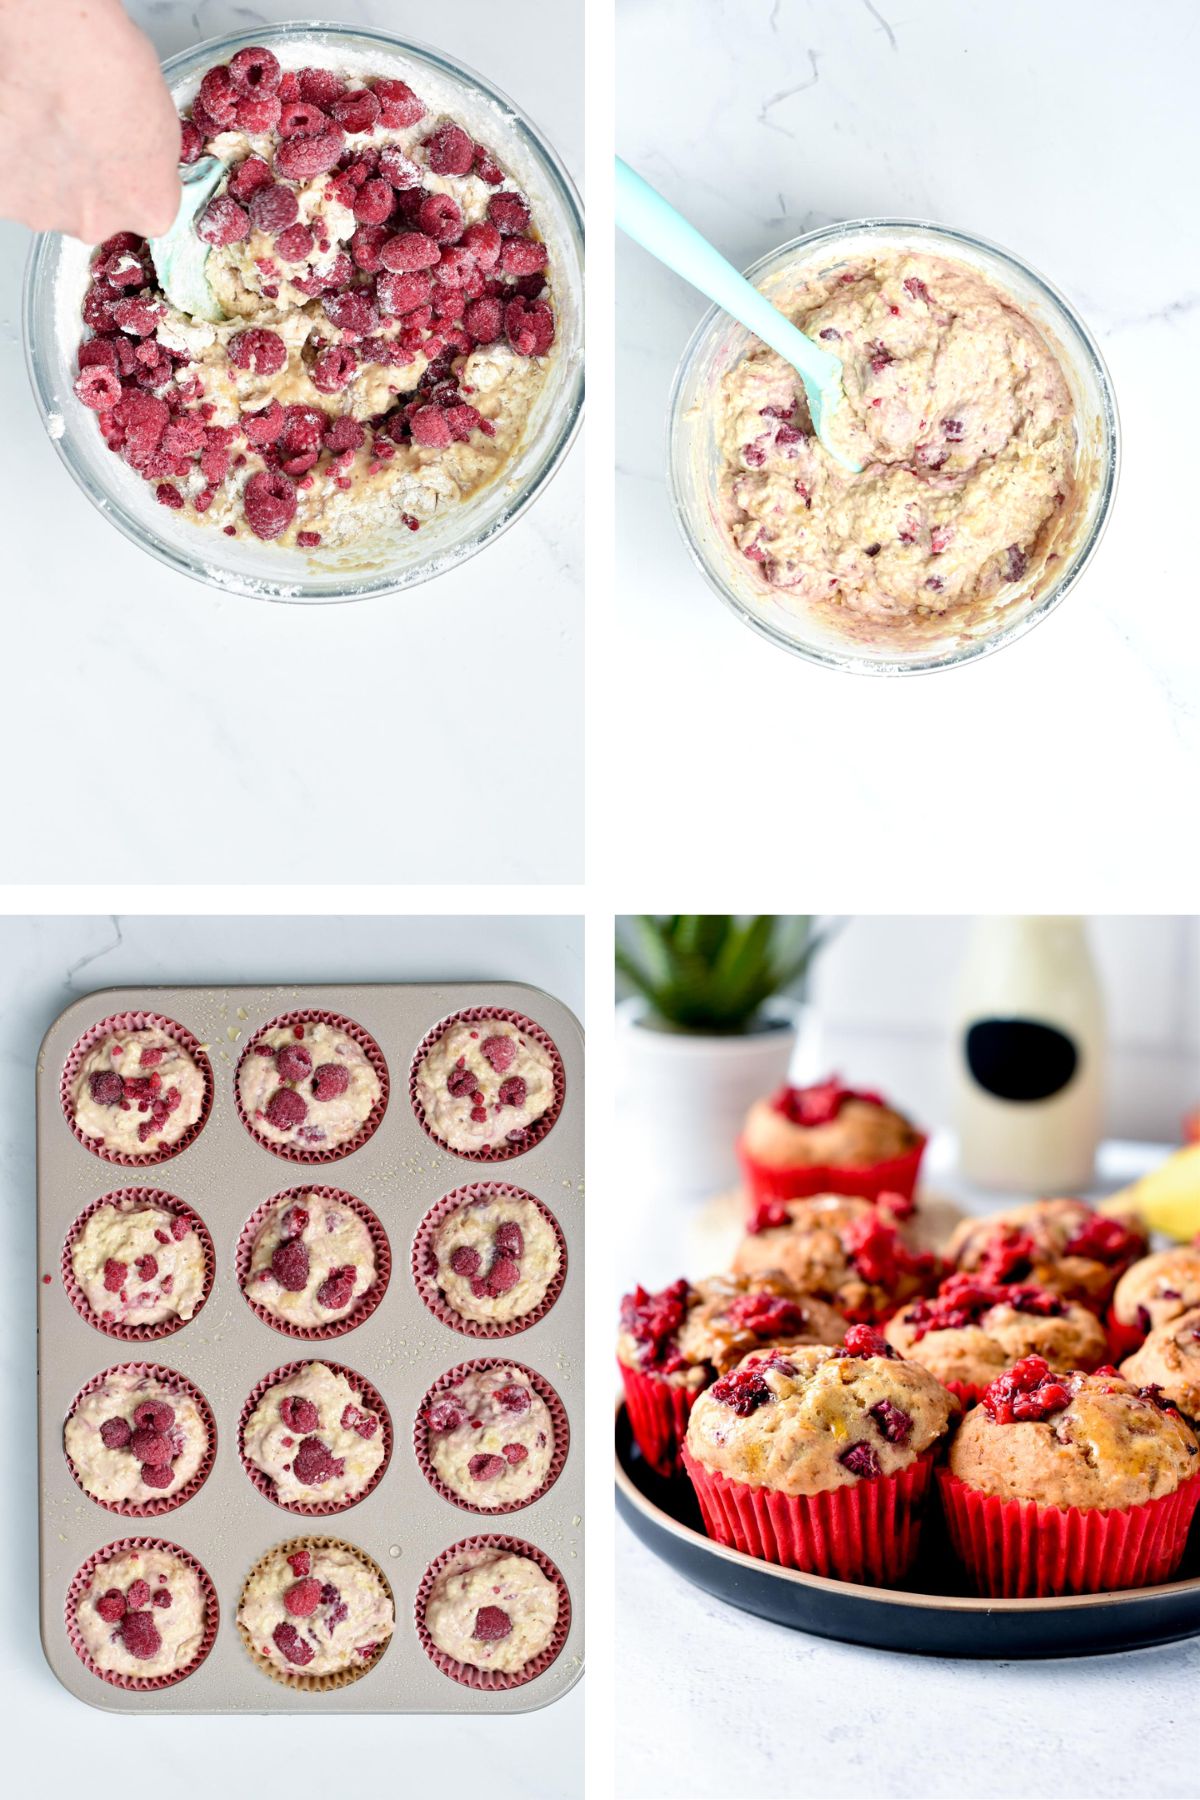 How to make Banana Raspberry MuffinsHow to make Banana Raspberry Muffins